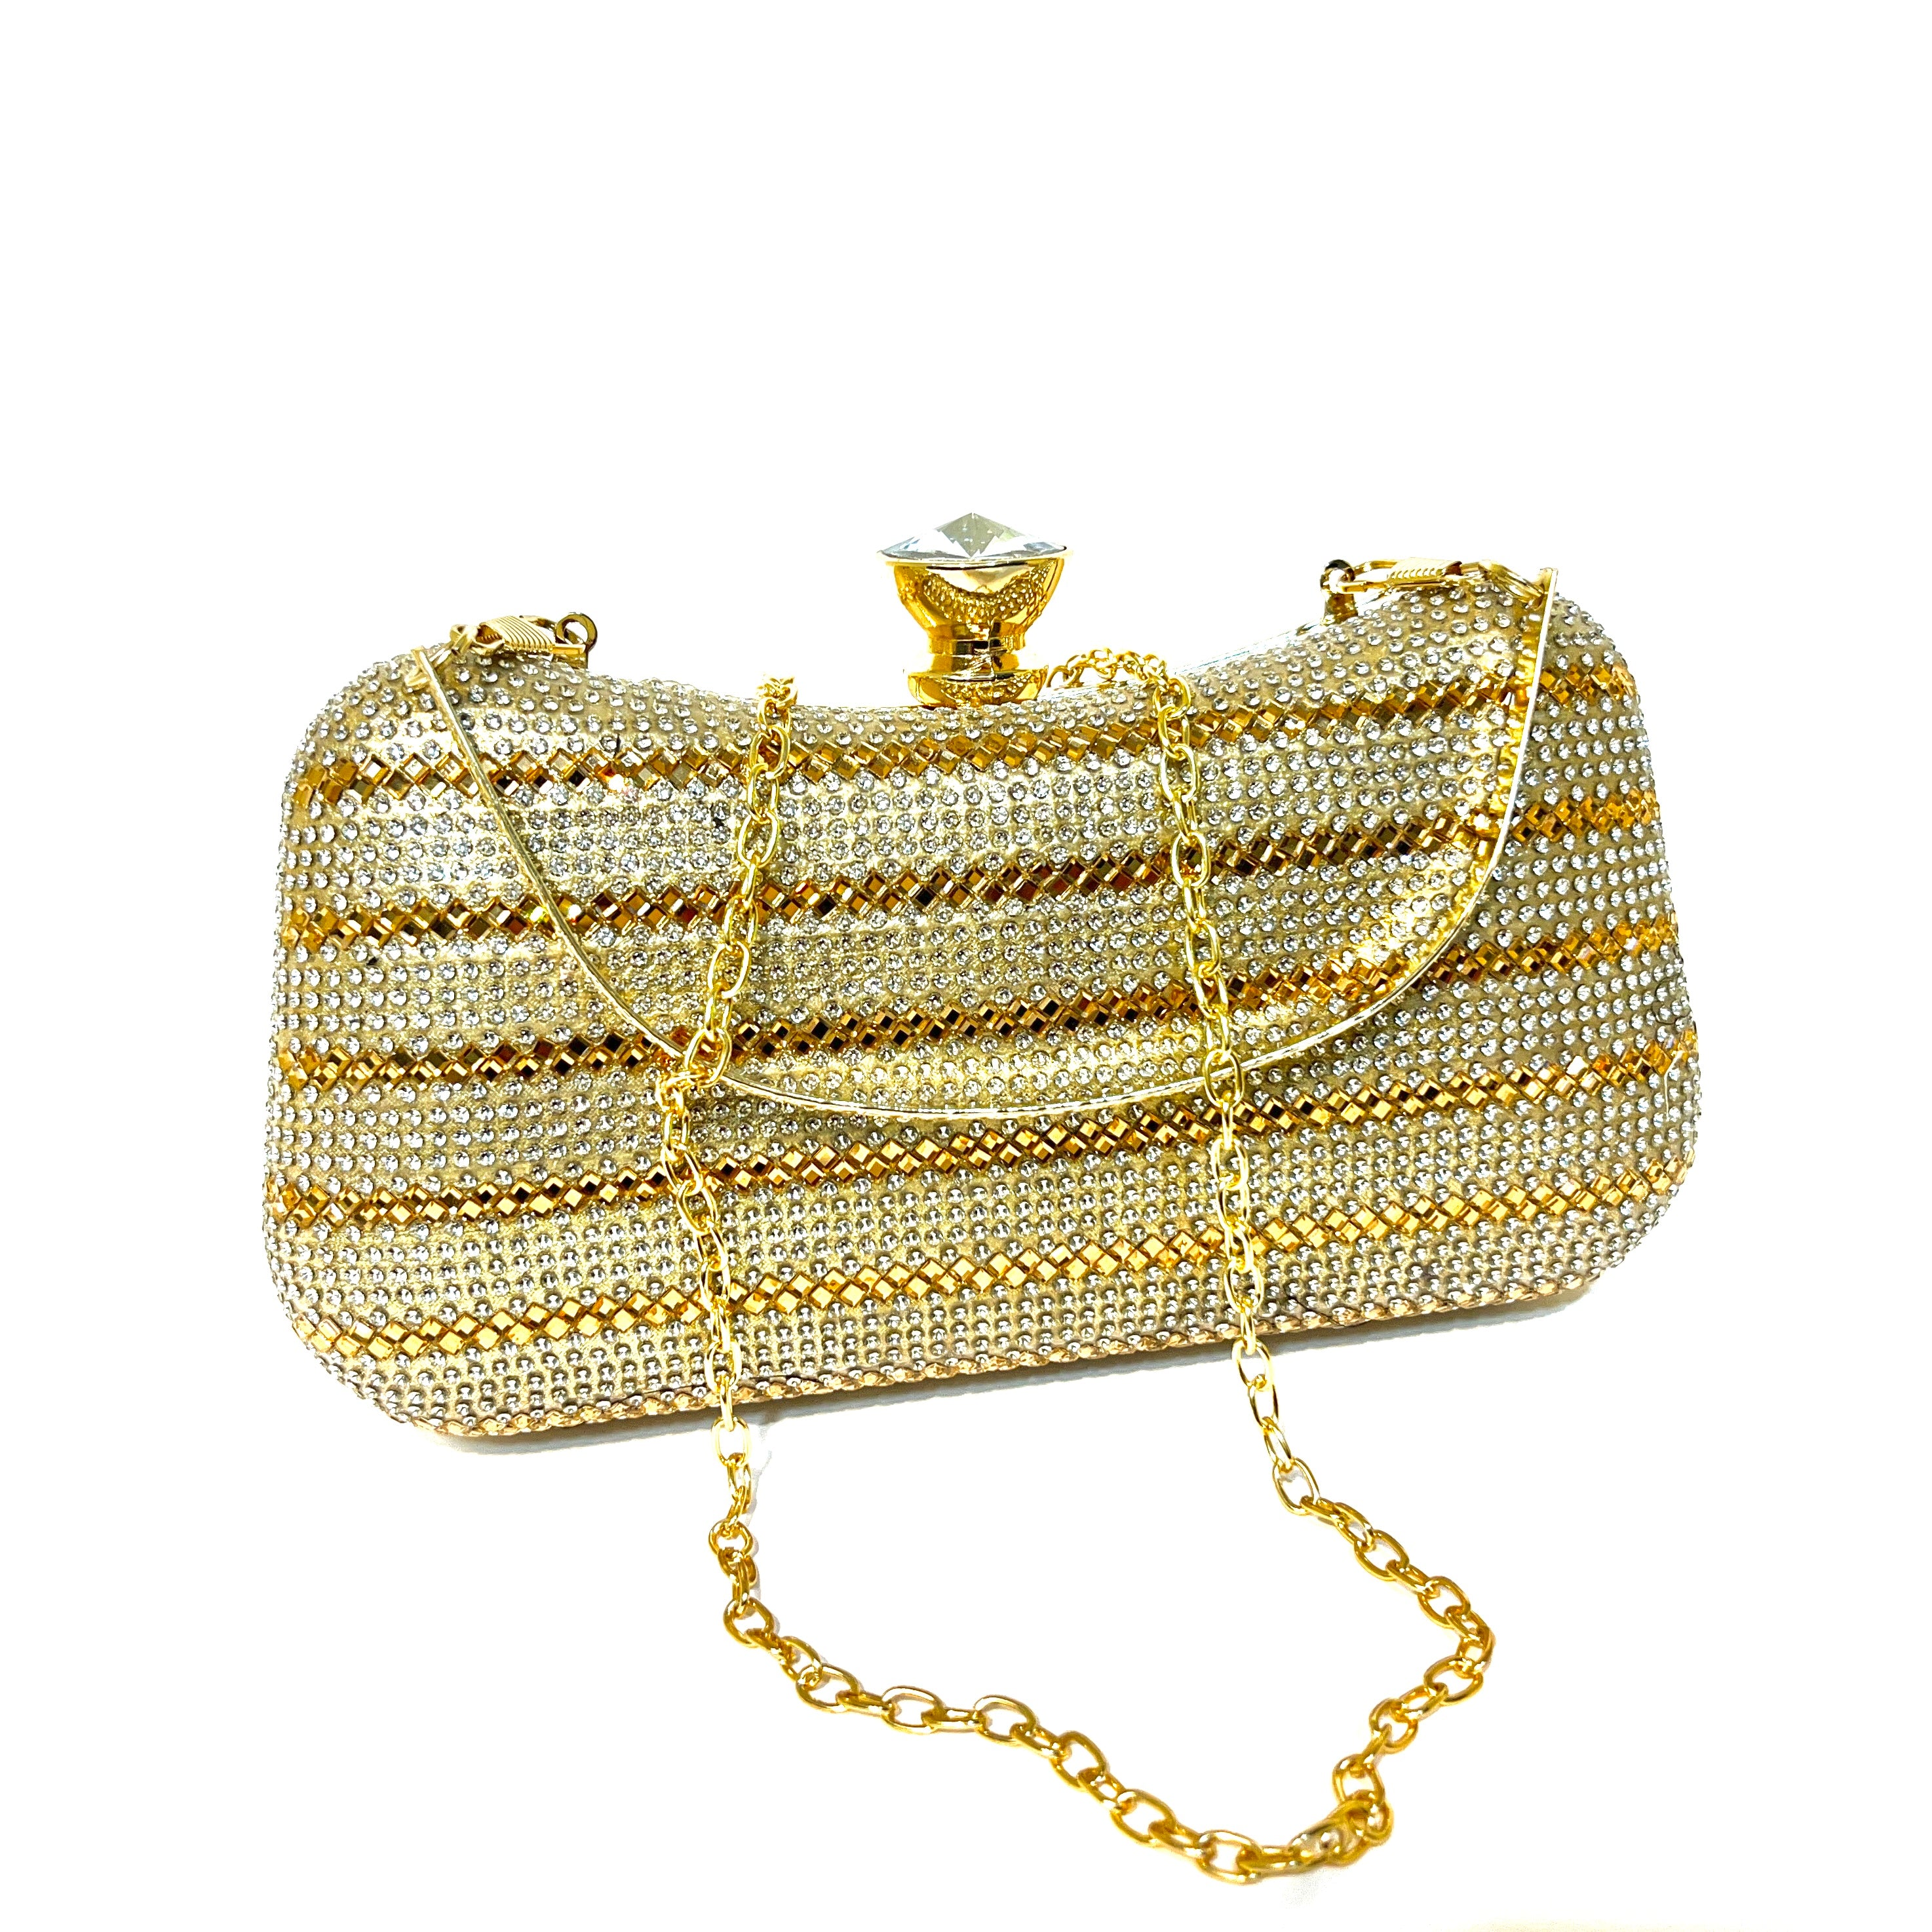 Crystal Women Evening Clutches Wedding Party Handbag Clutch Purse-Gold  color | eBay